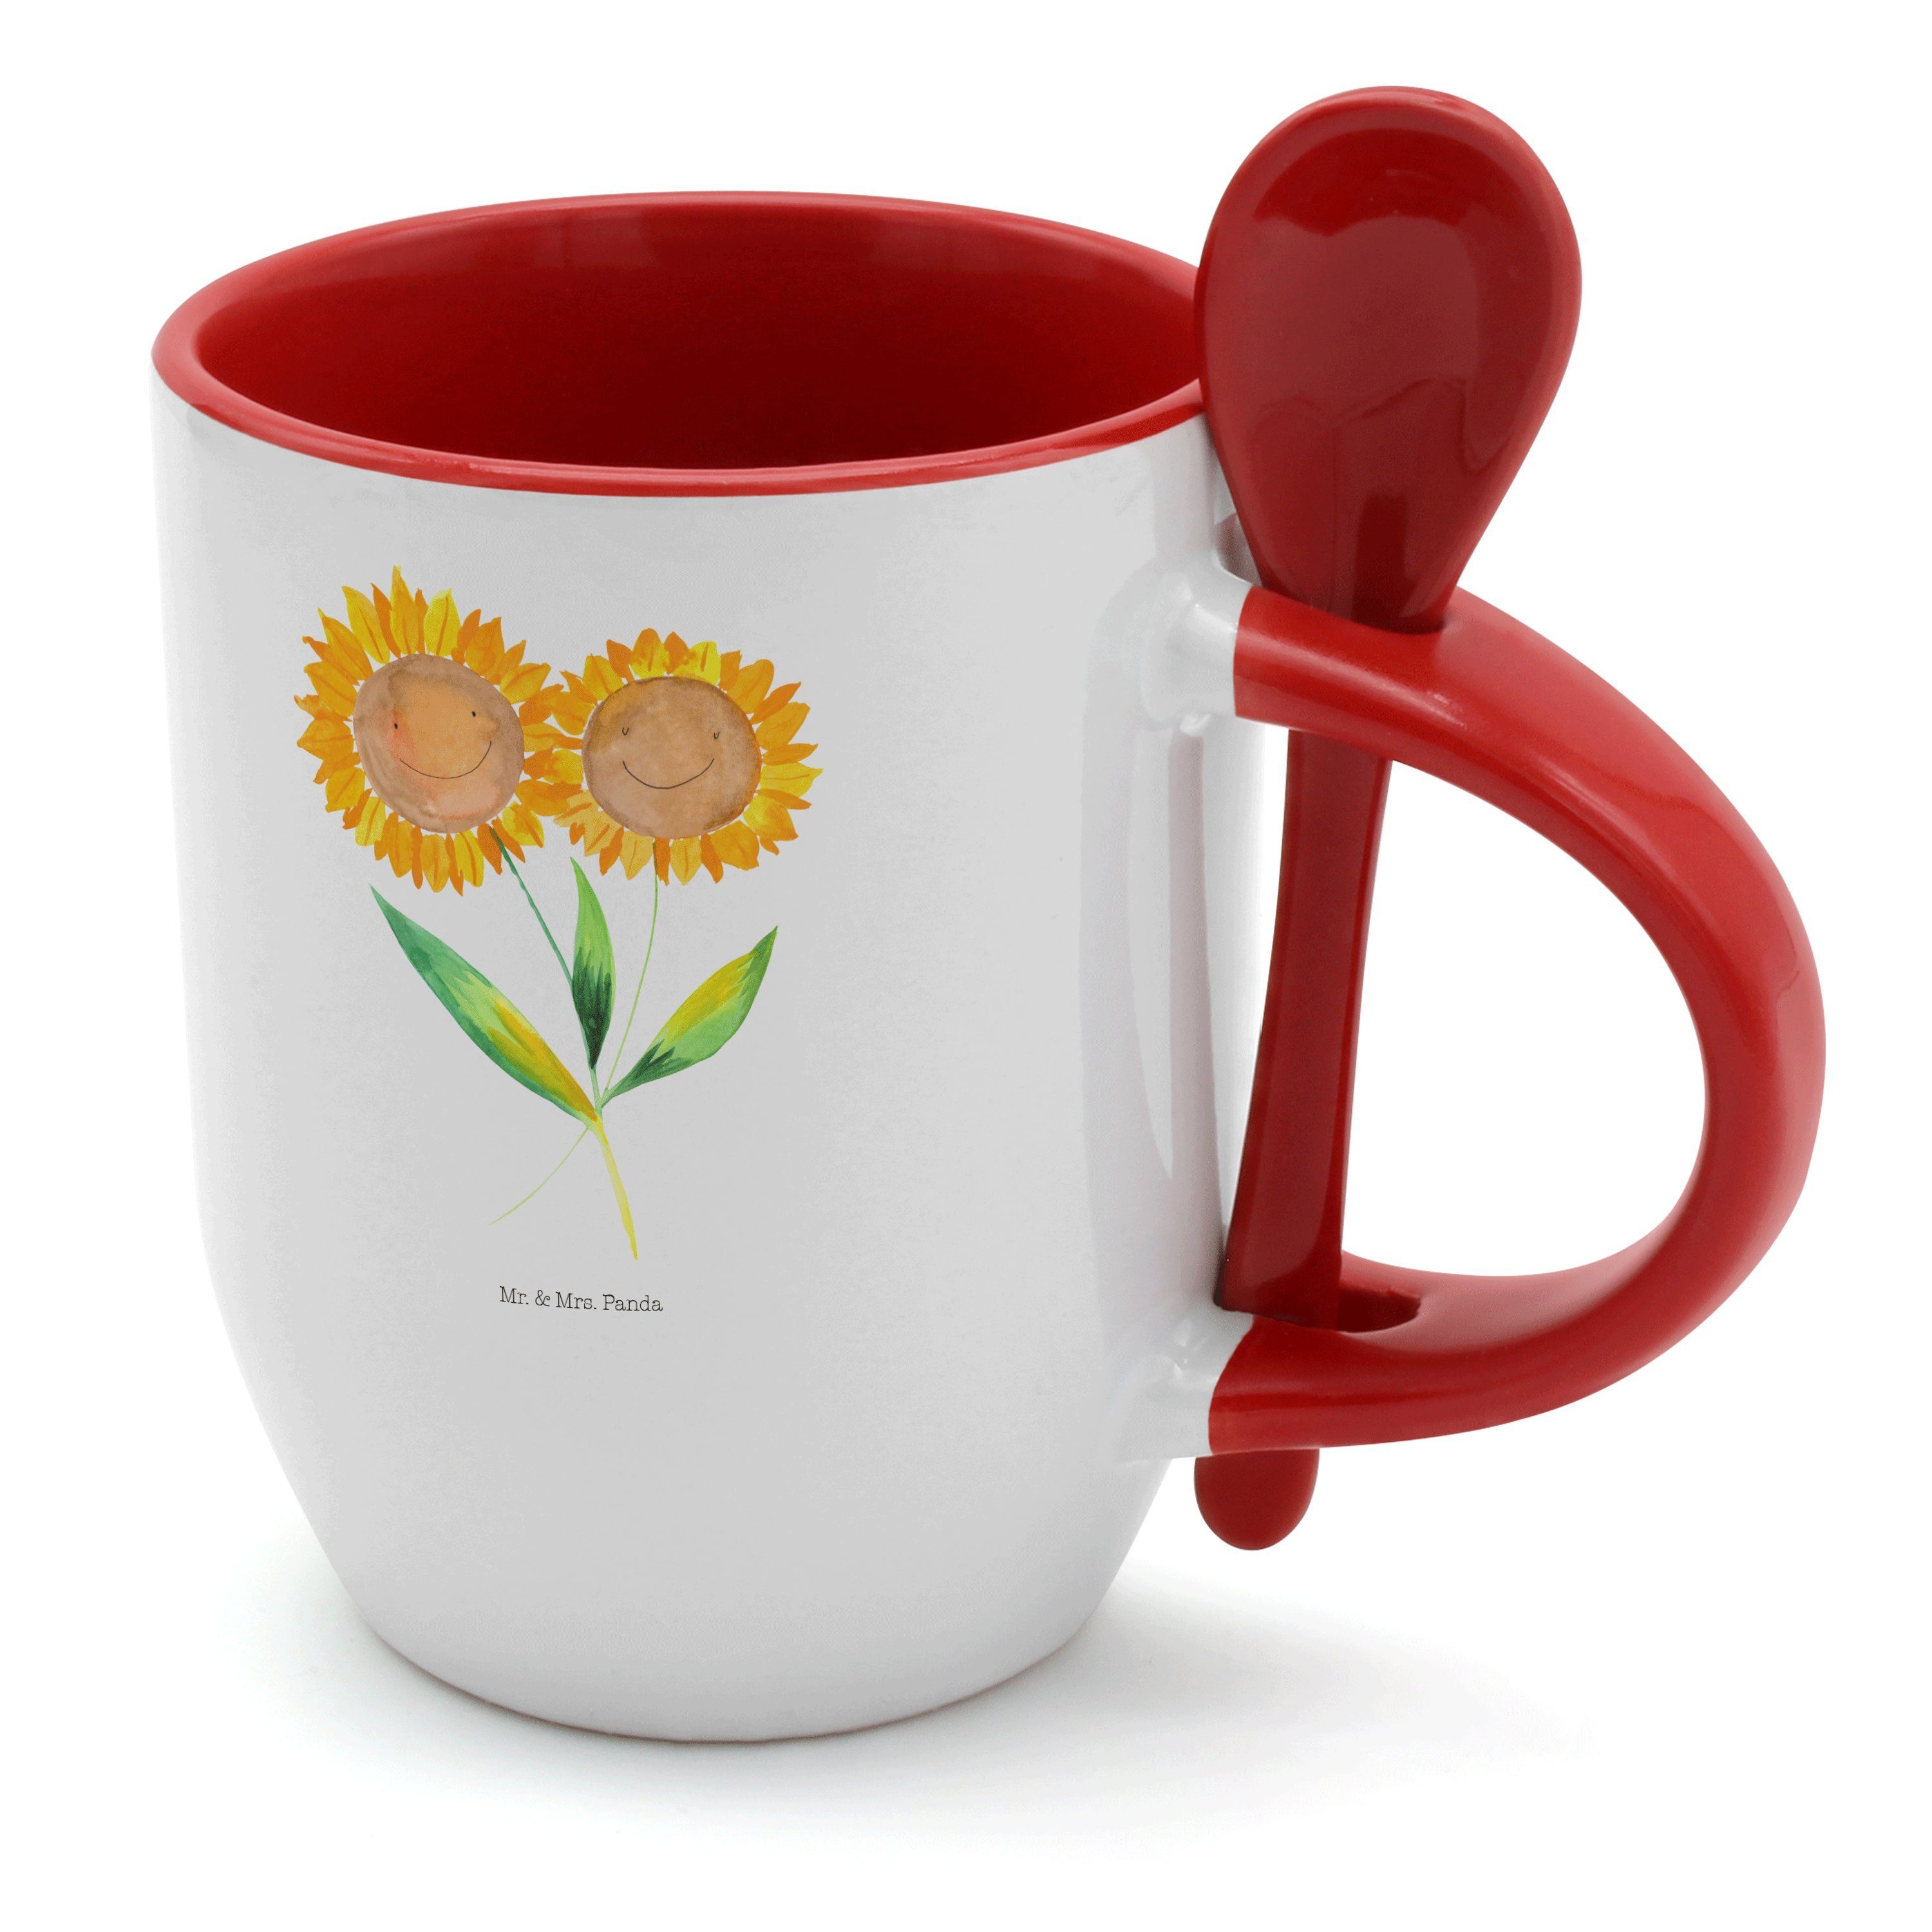 Mr. & Mrs. Panda Tasse Blume Sonnenblume - Weiß - Geschenk, Kaffeetasse, Kaffeebecher, Tasse, Keramik, Inklusive Löffel